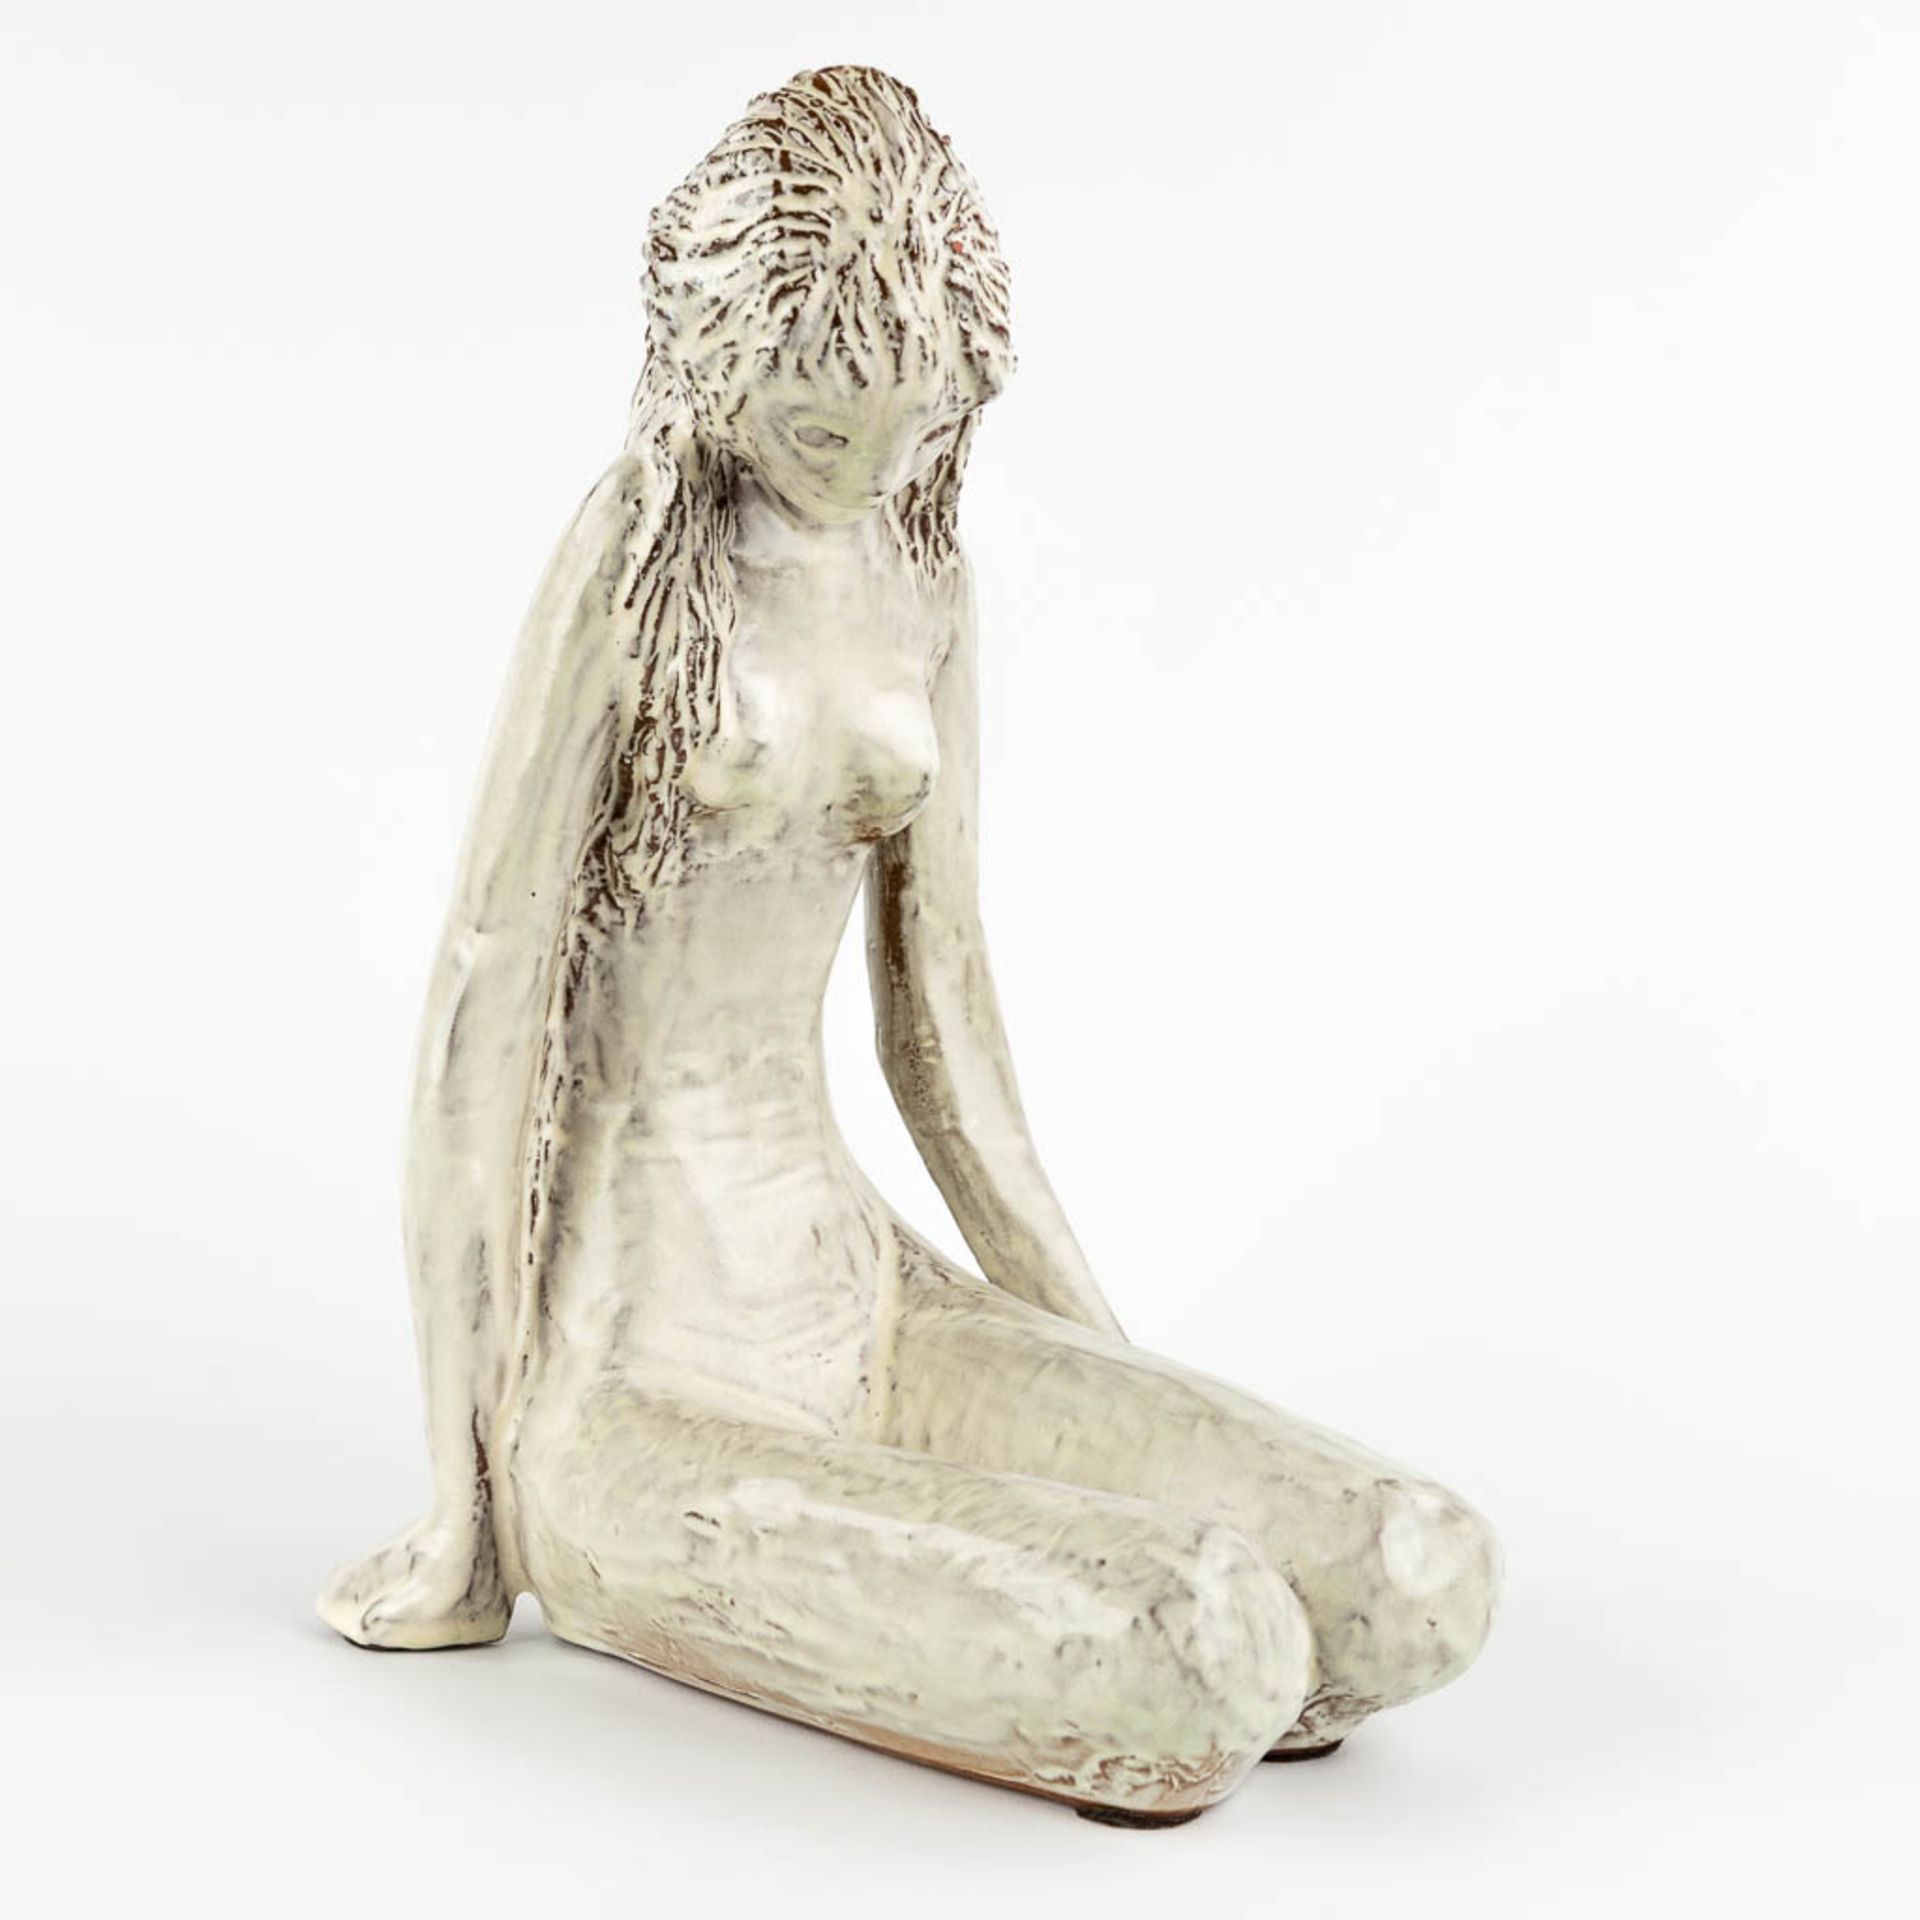 Elie VAN DAMME (1928) 'Seated Lady' for Amphora. (D:25 x W:24 x H:33 cm)